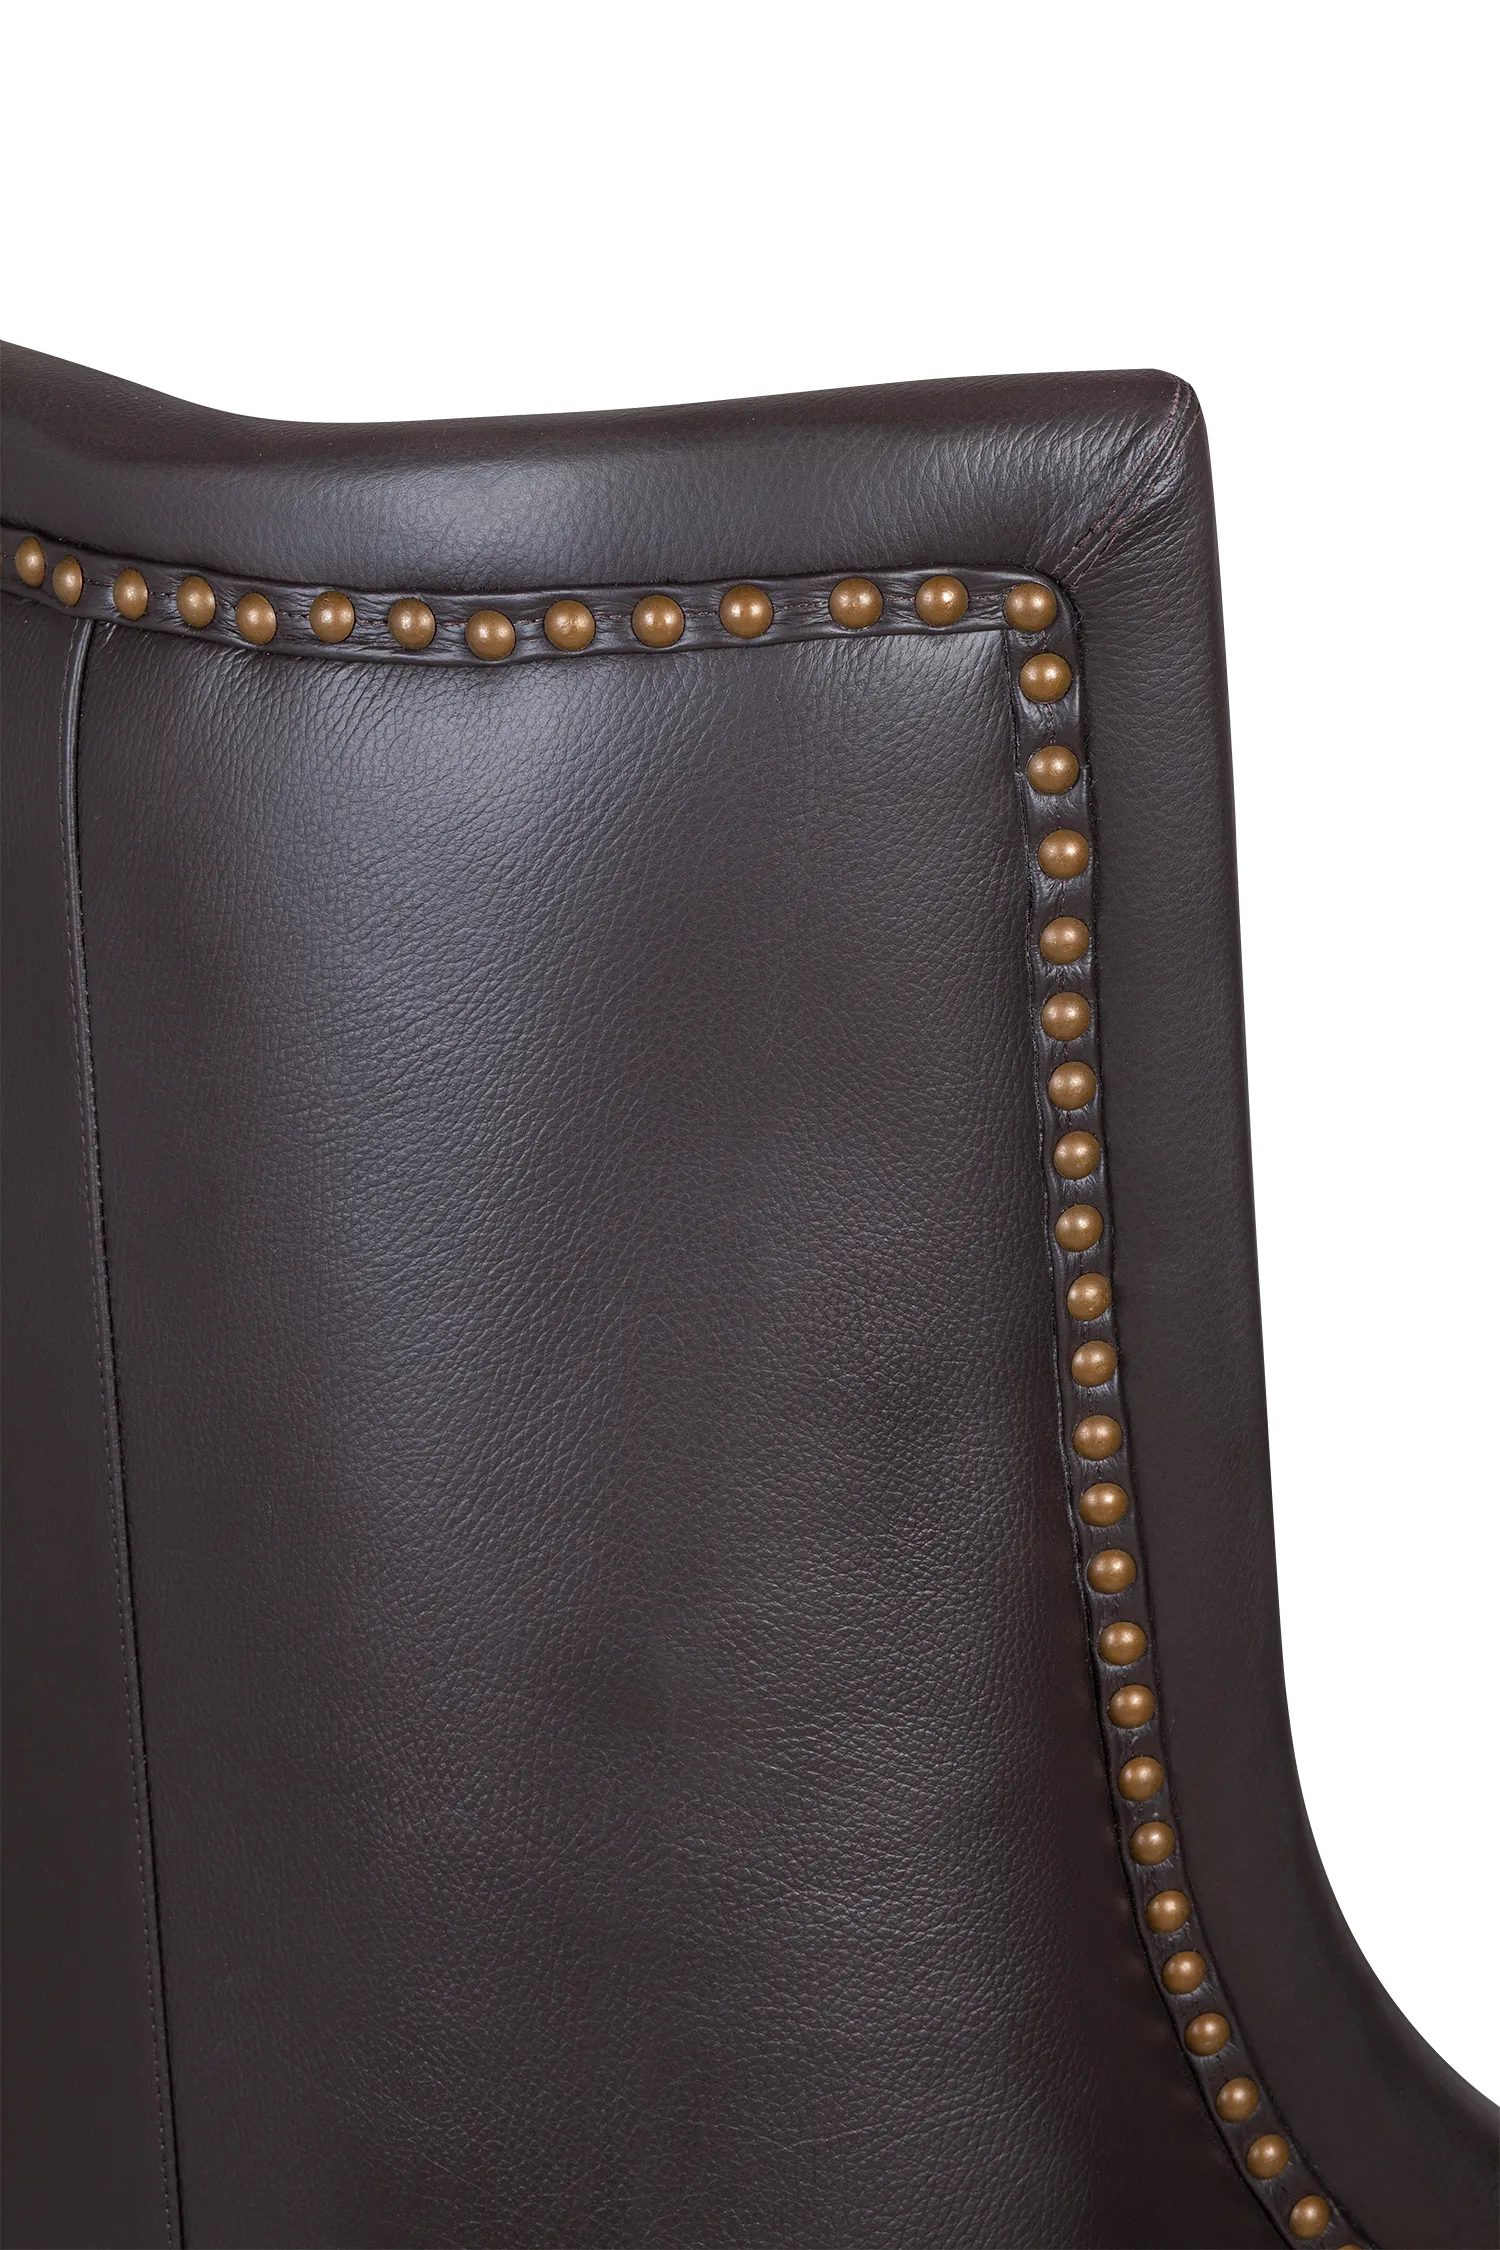 Кресло Chester leather натуральная кожа коричневый